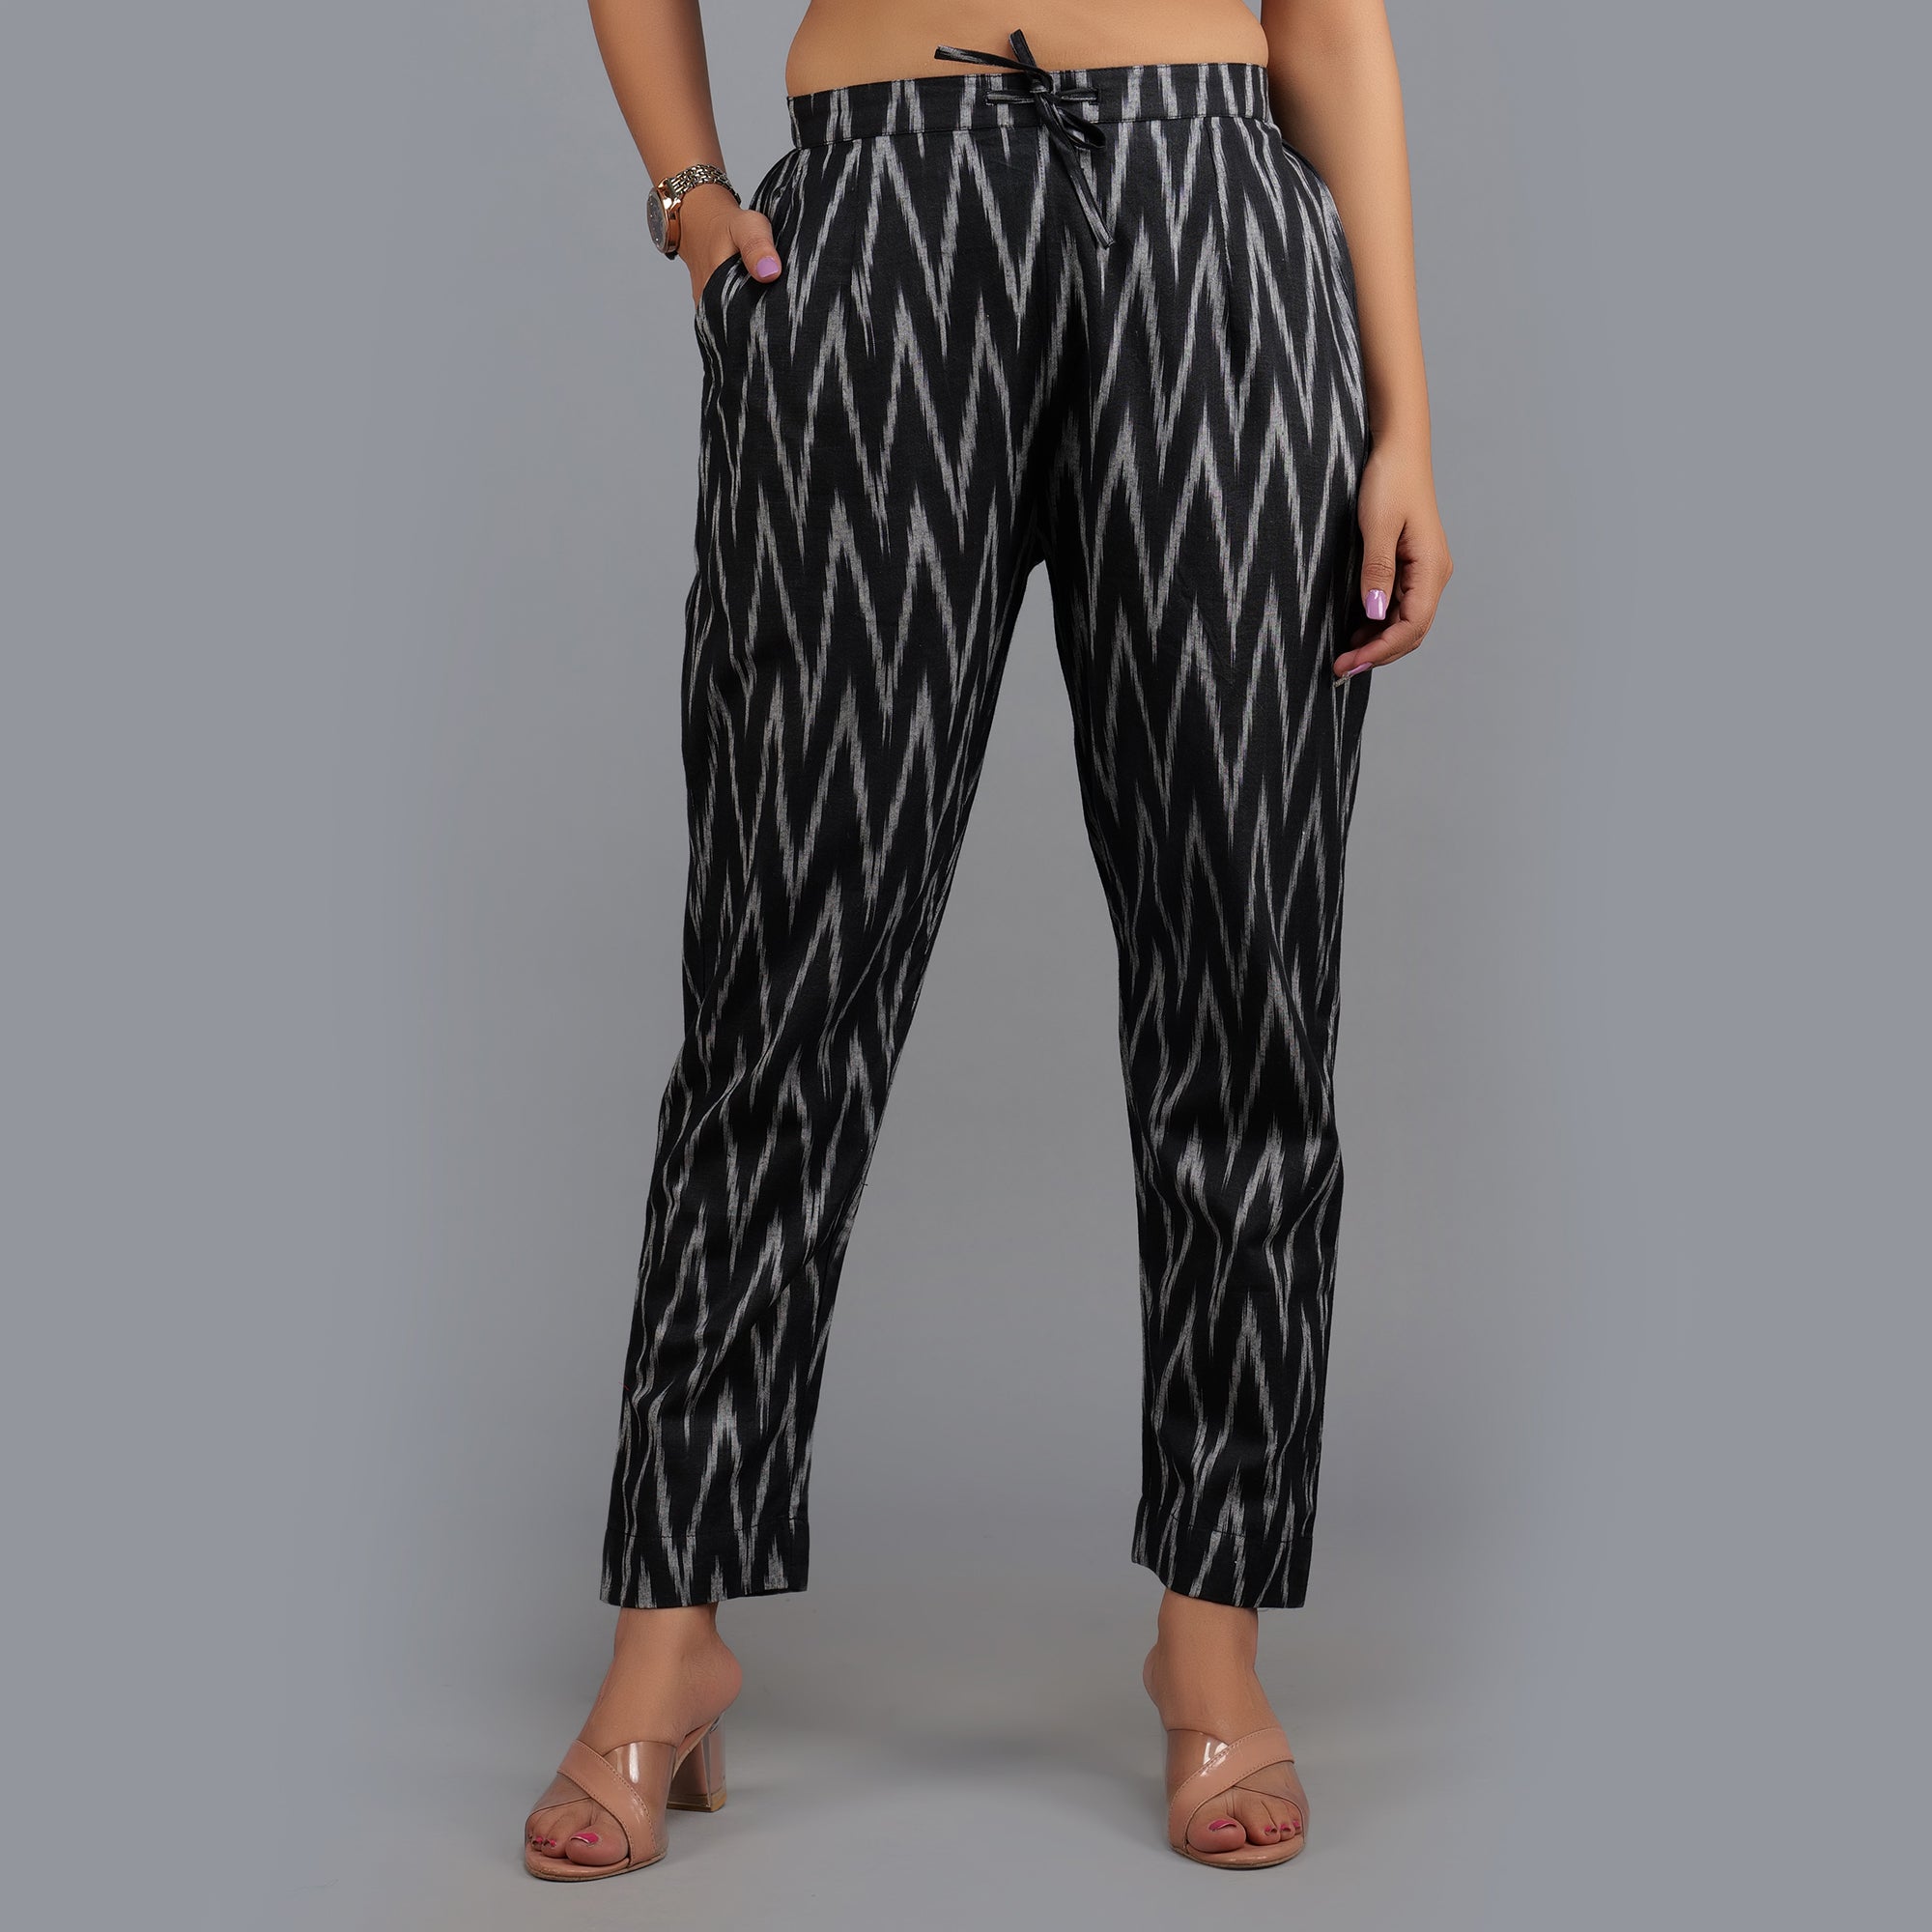 Black Striped Pant For Women  109Fcom